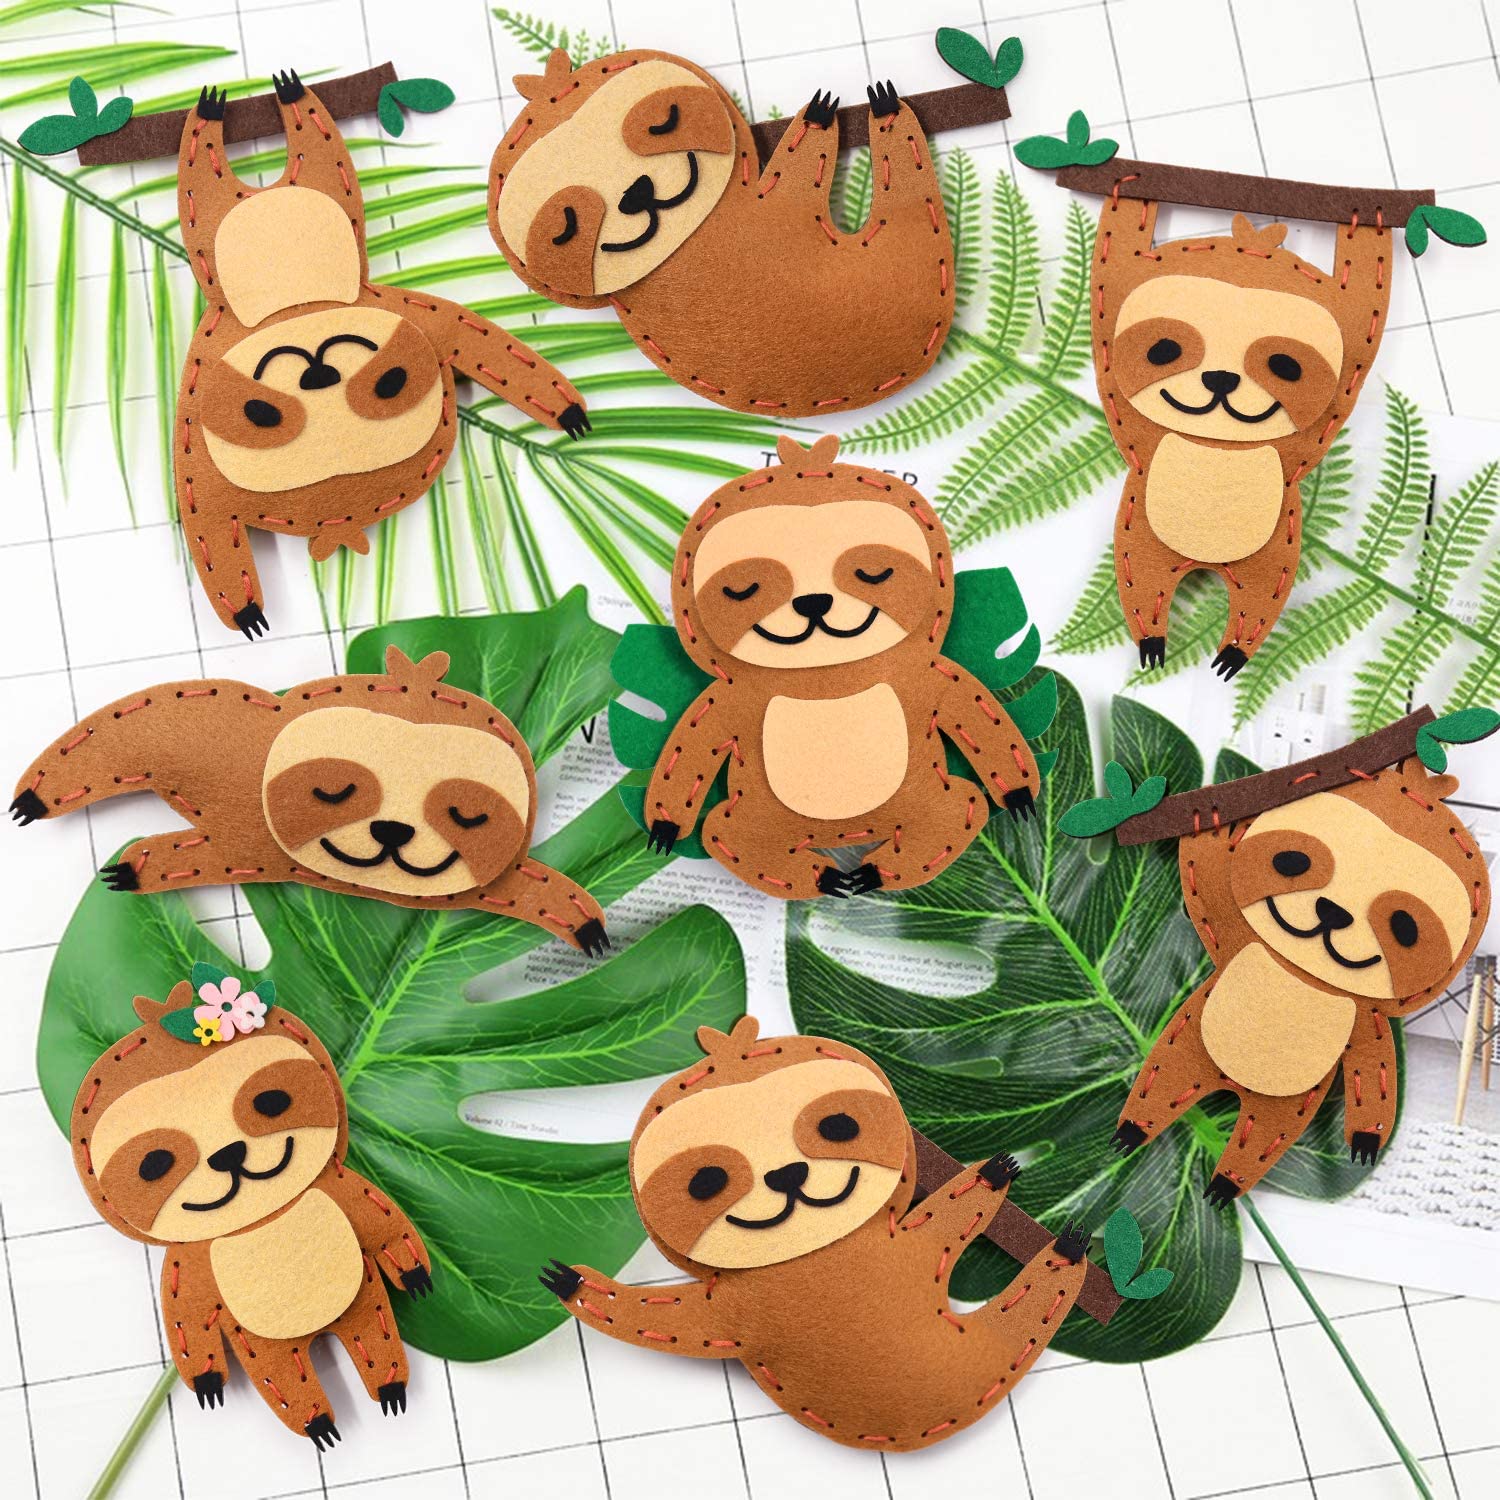 Sloth sewing kit